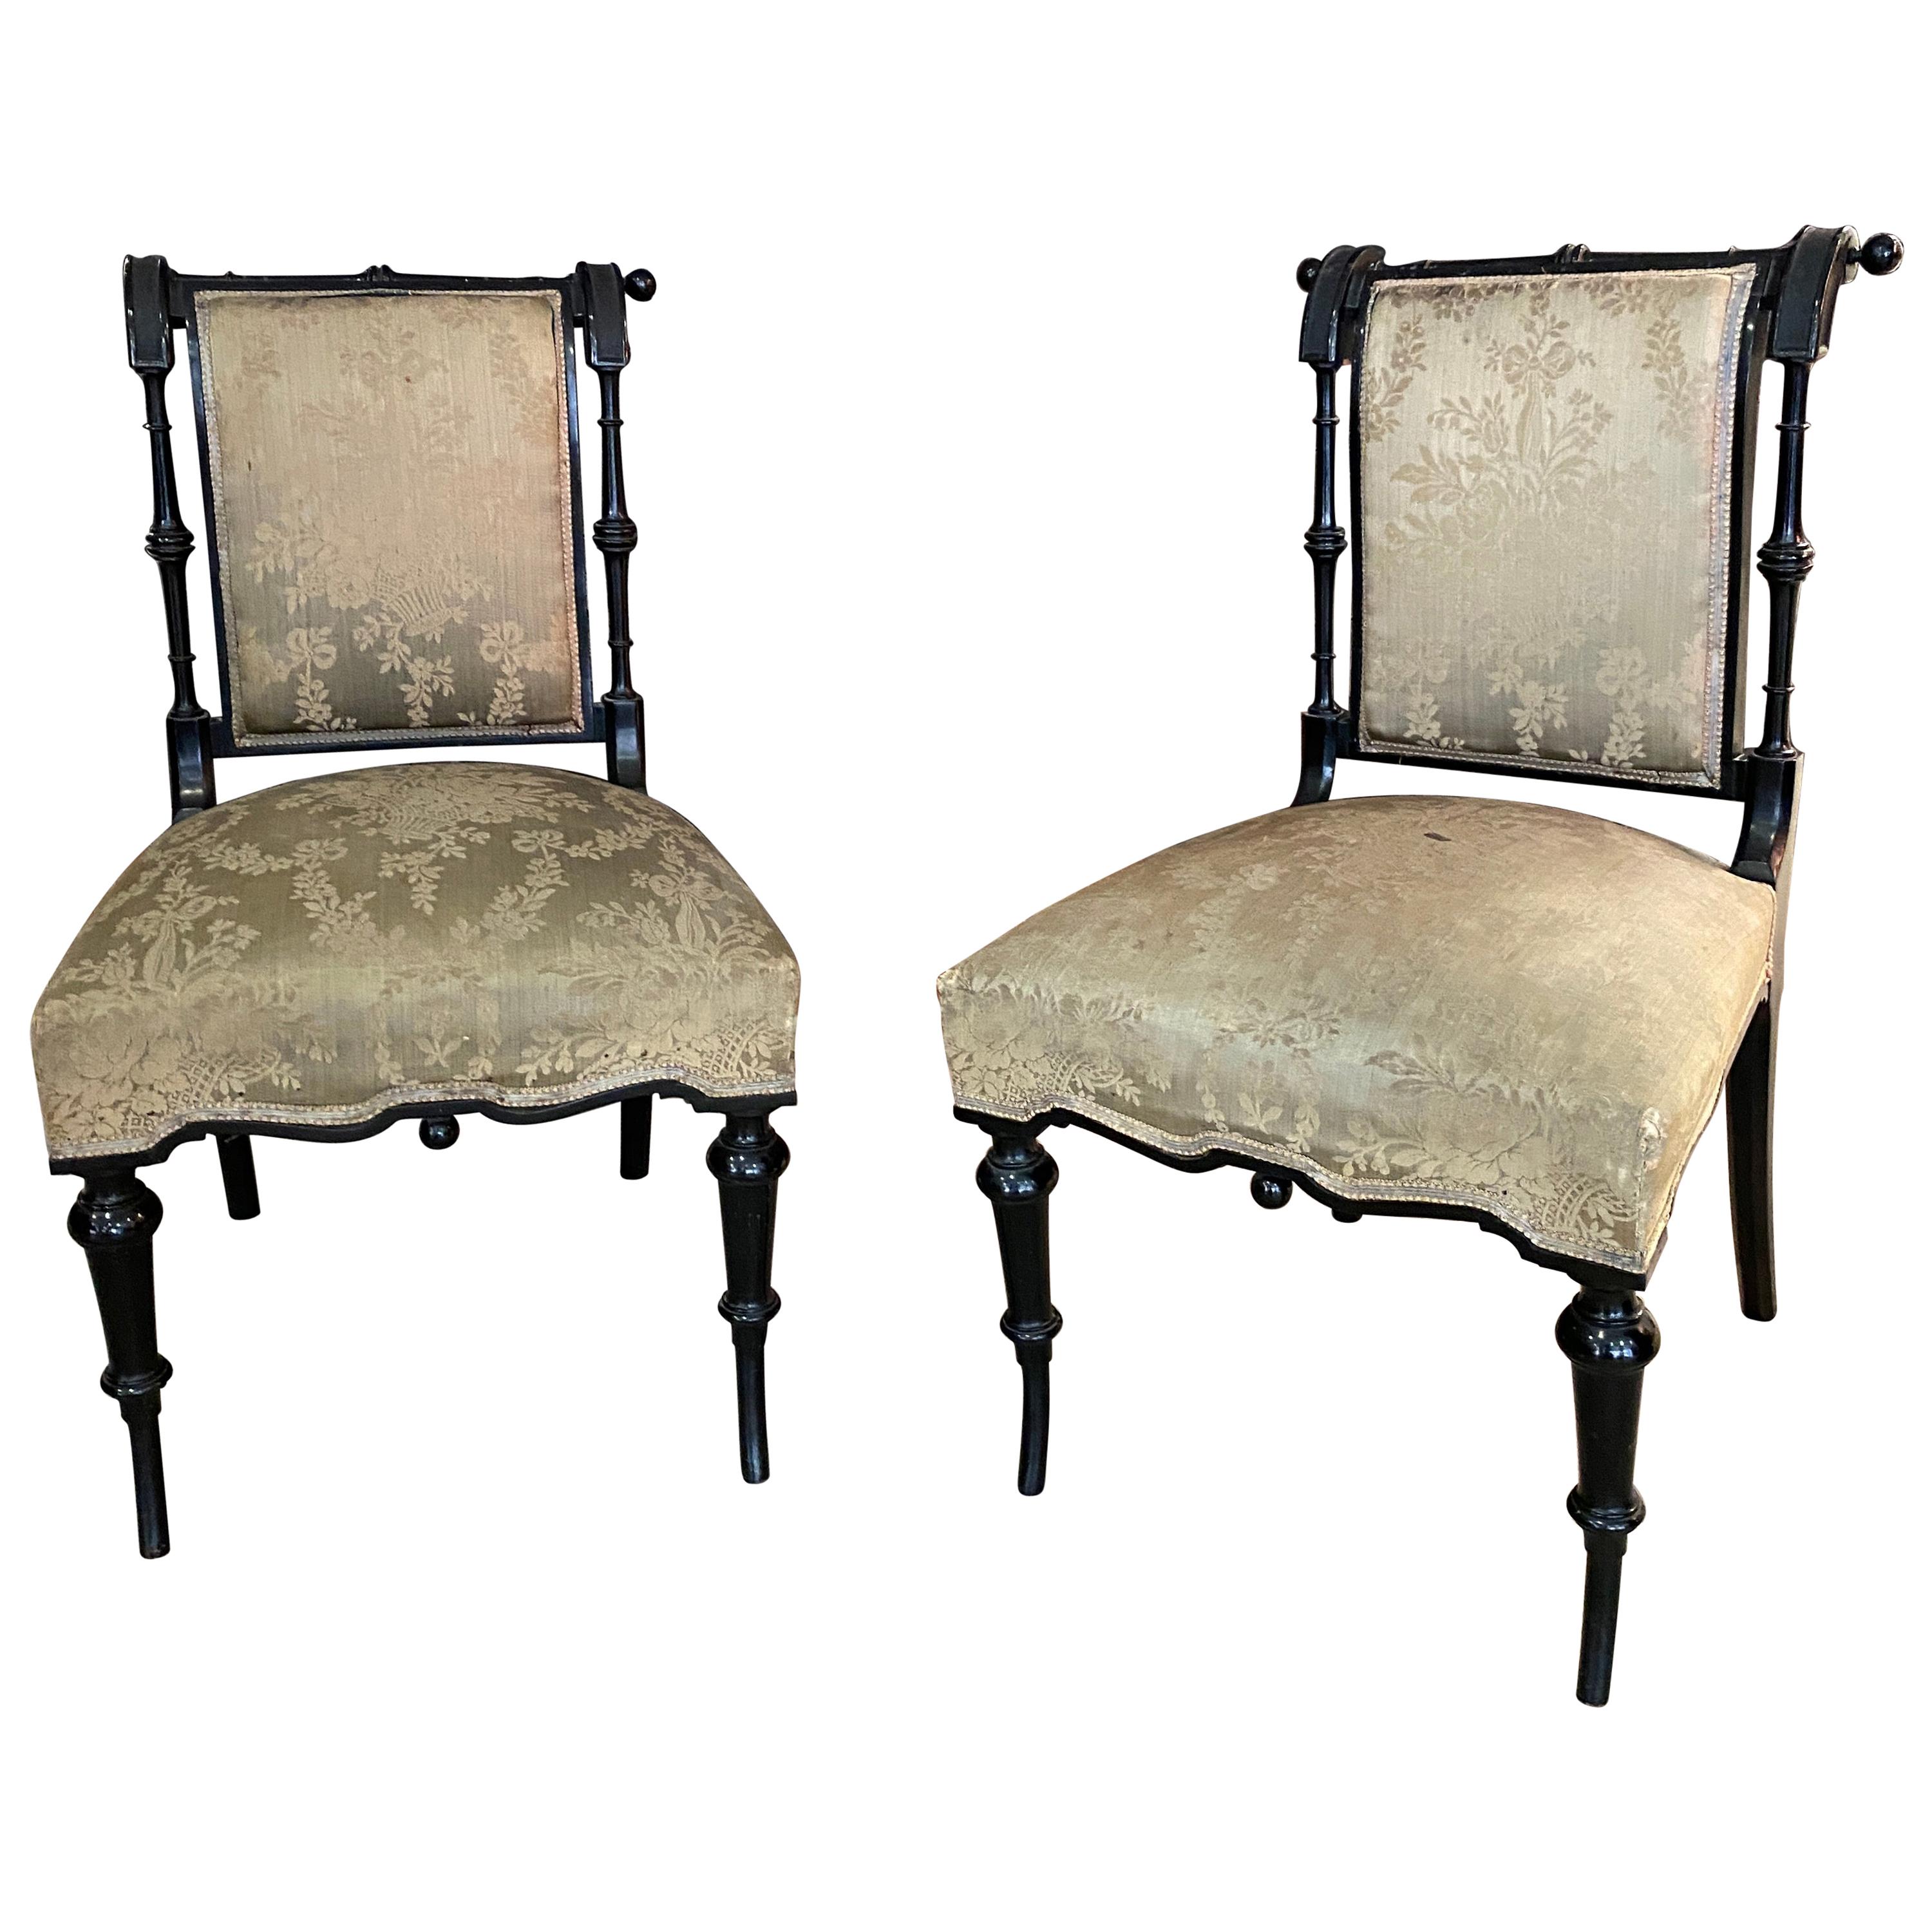 2 Original Napoleon III Ebonized Chairs, France, 1850s For Sale